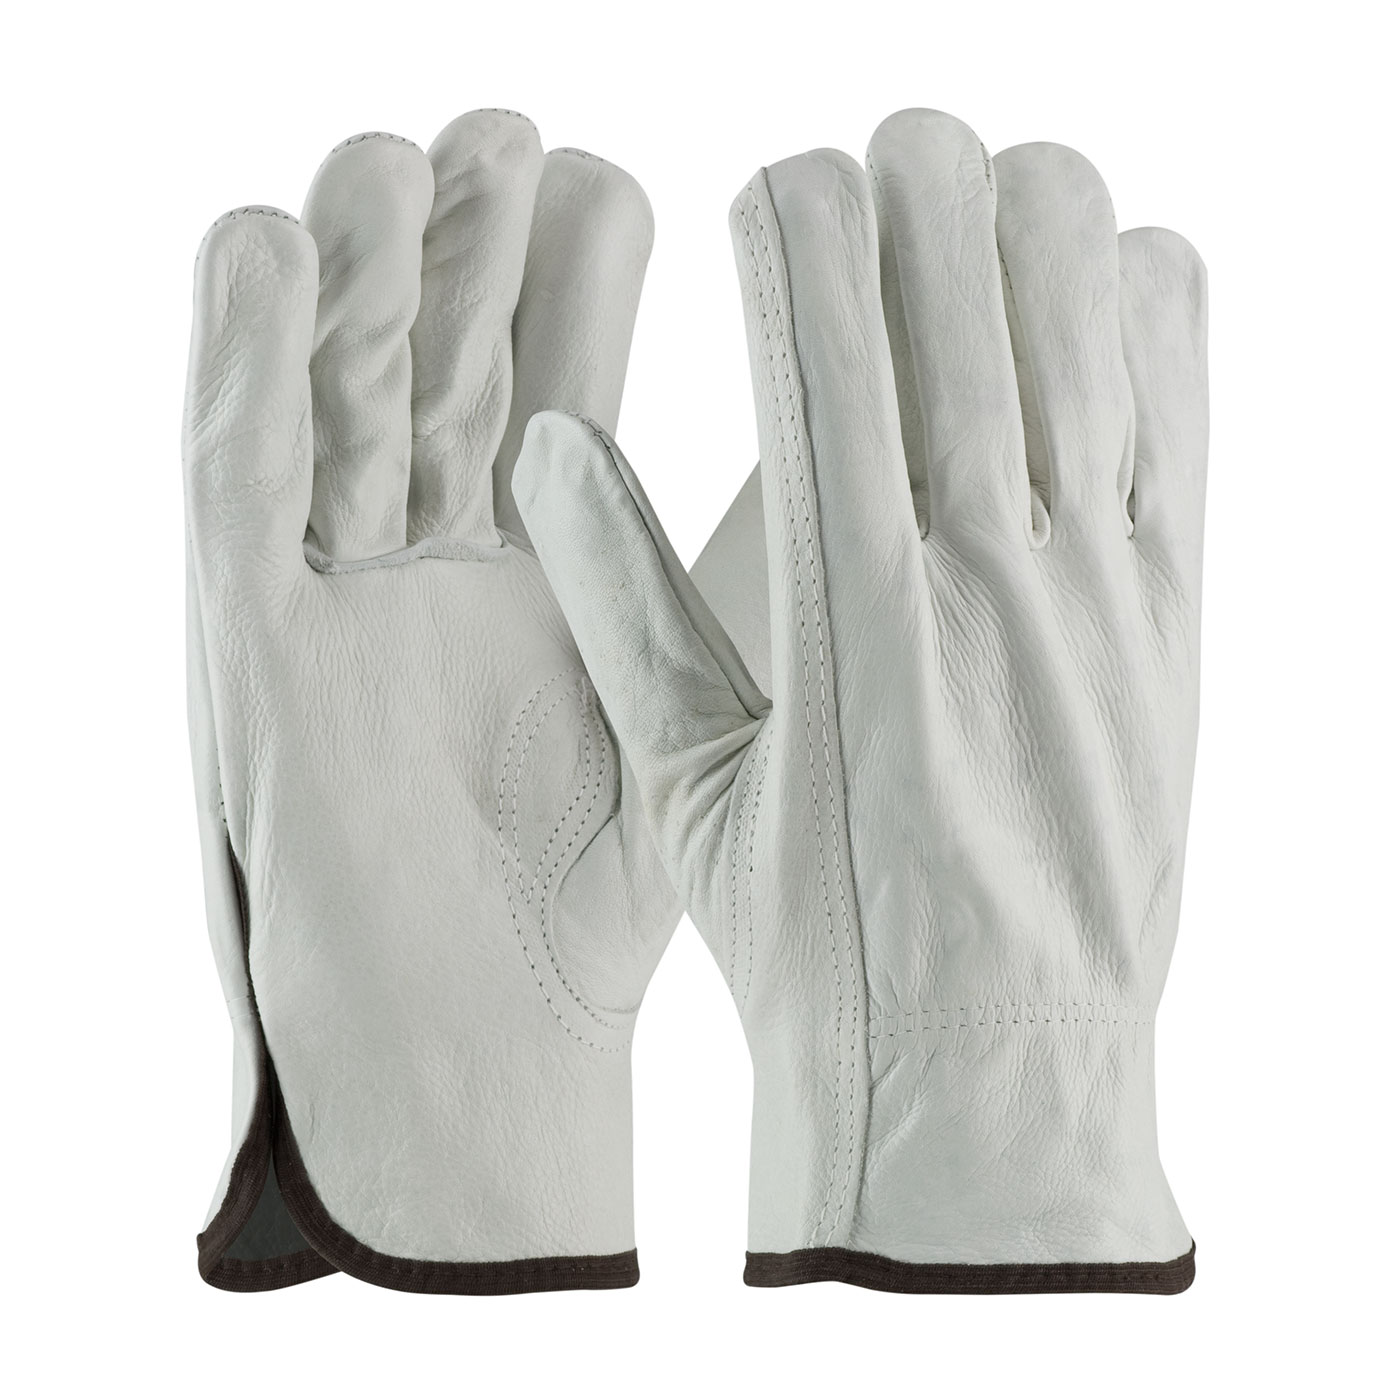 PIP 68-163/L Regular Grade Top Grain Cowhide Leather Drivers Glove - Keystone Thumb - Large PID-68 163 L